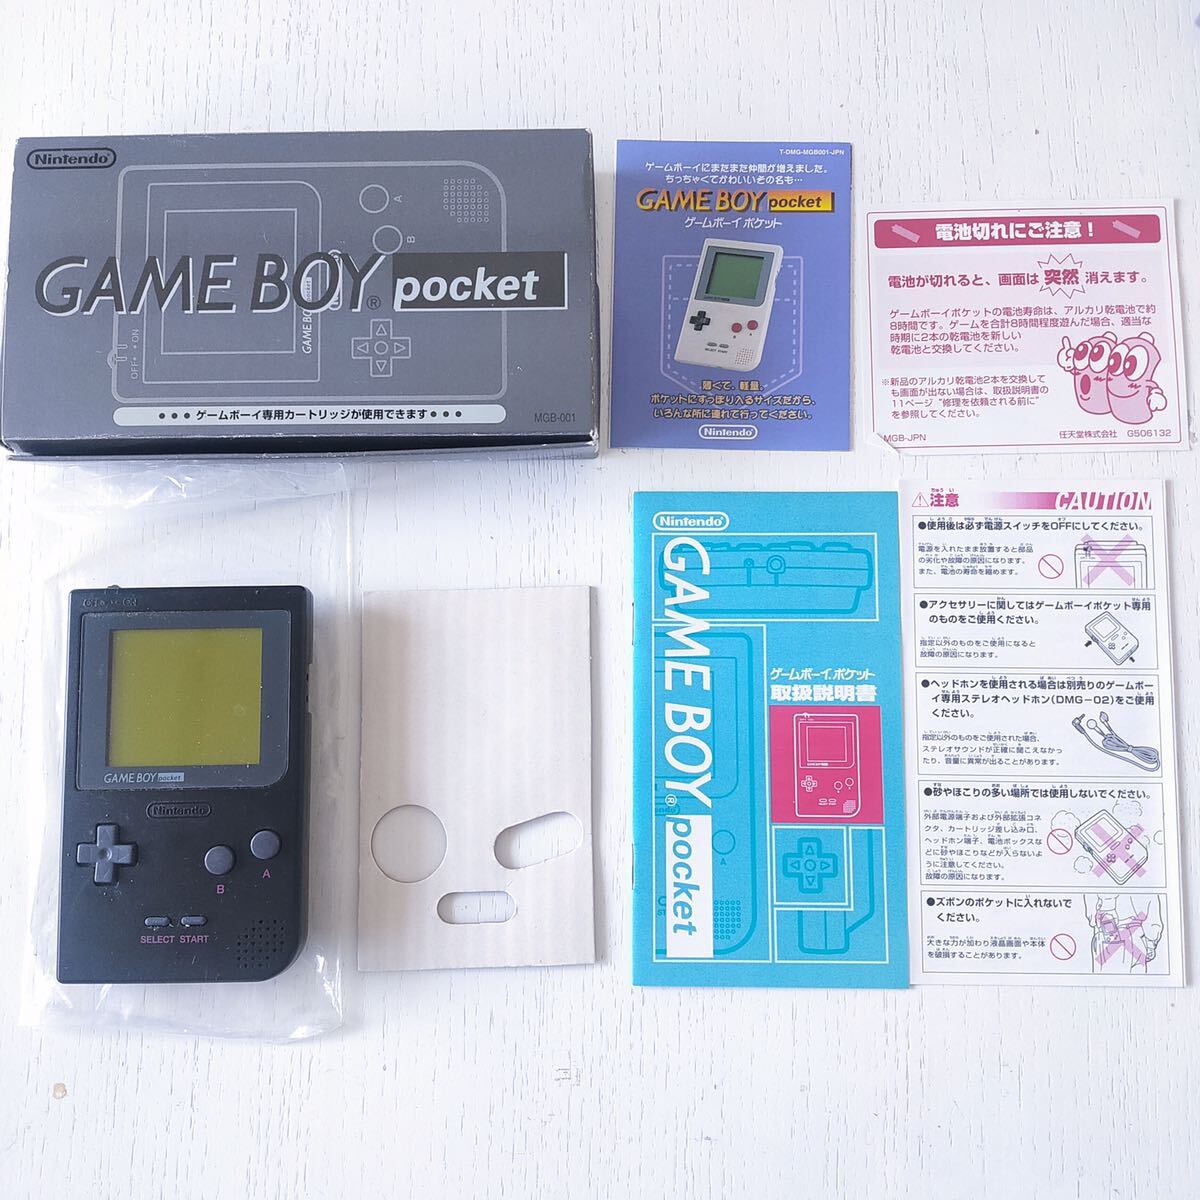  Game Boy карман Nintendo с коробкой черный чёрный цвет корпус Pokemon Pokemon карта Pocket Monster 